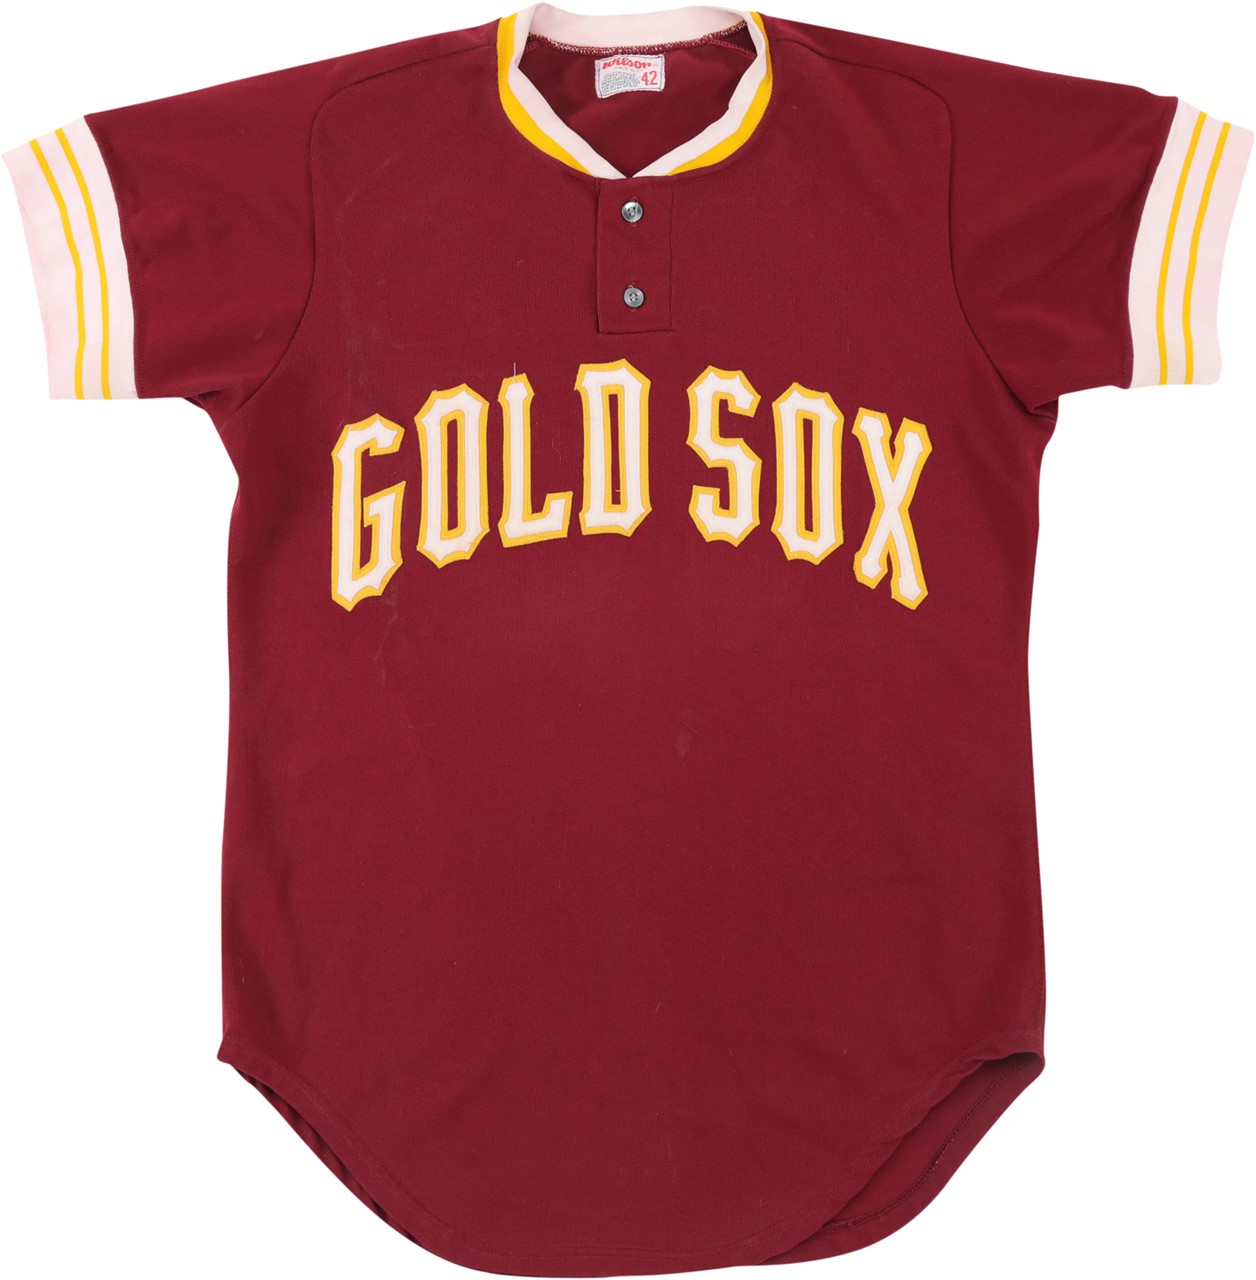 Baseball Equipment - Circa 1986 Gary Sheffield Helena Gold Sox Game Worn Jersey